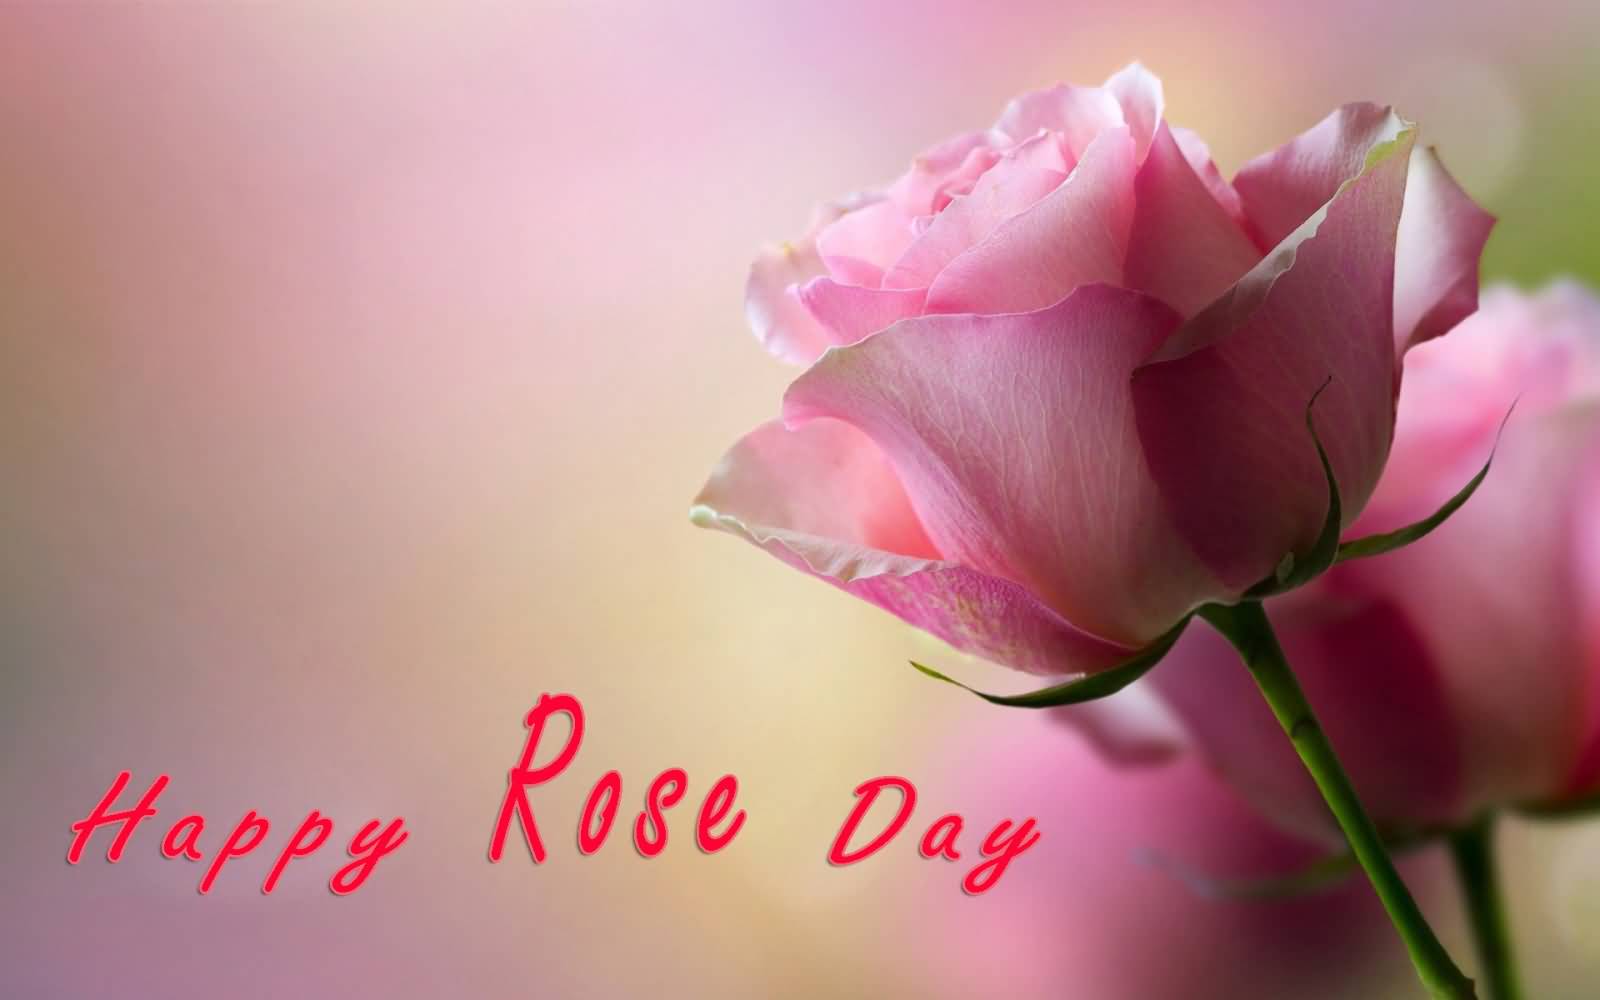 Happy Rose Day Pink Rose Bud